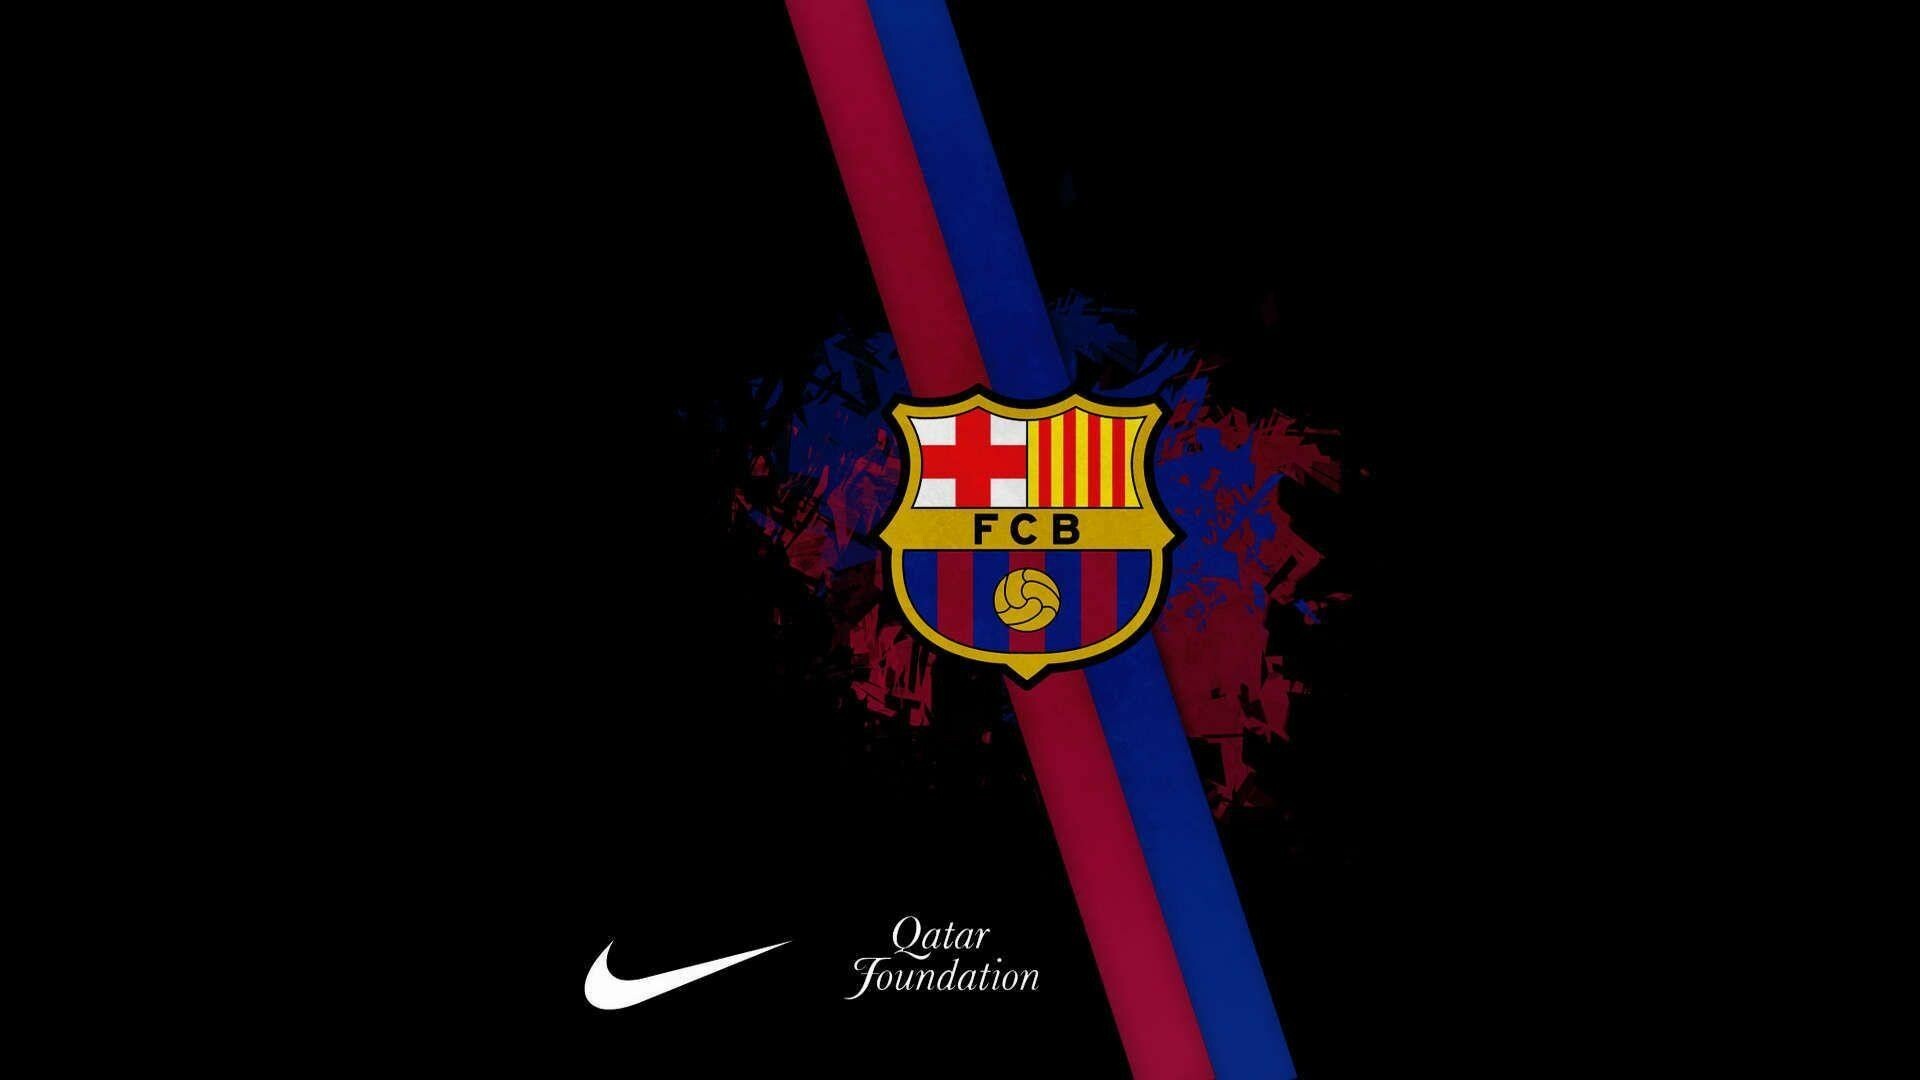 FC Barcelona wallpaper - Opera add-ons